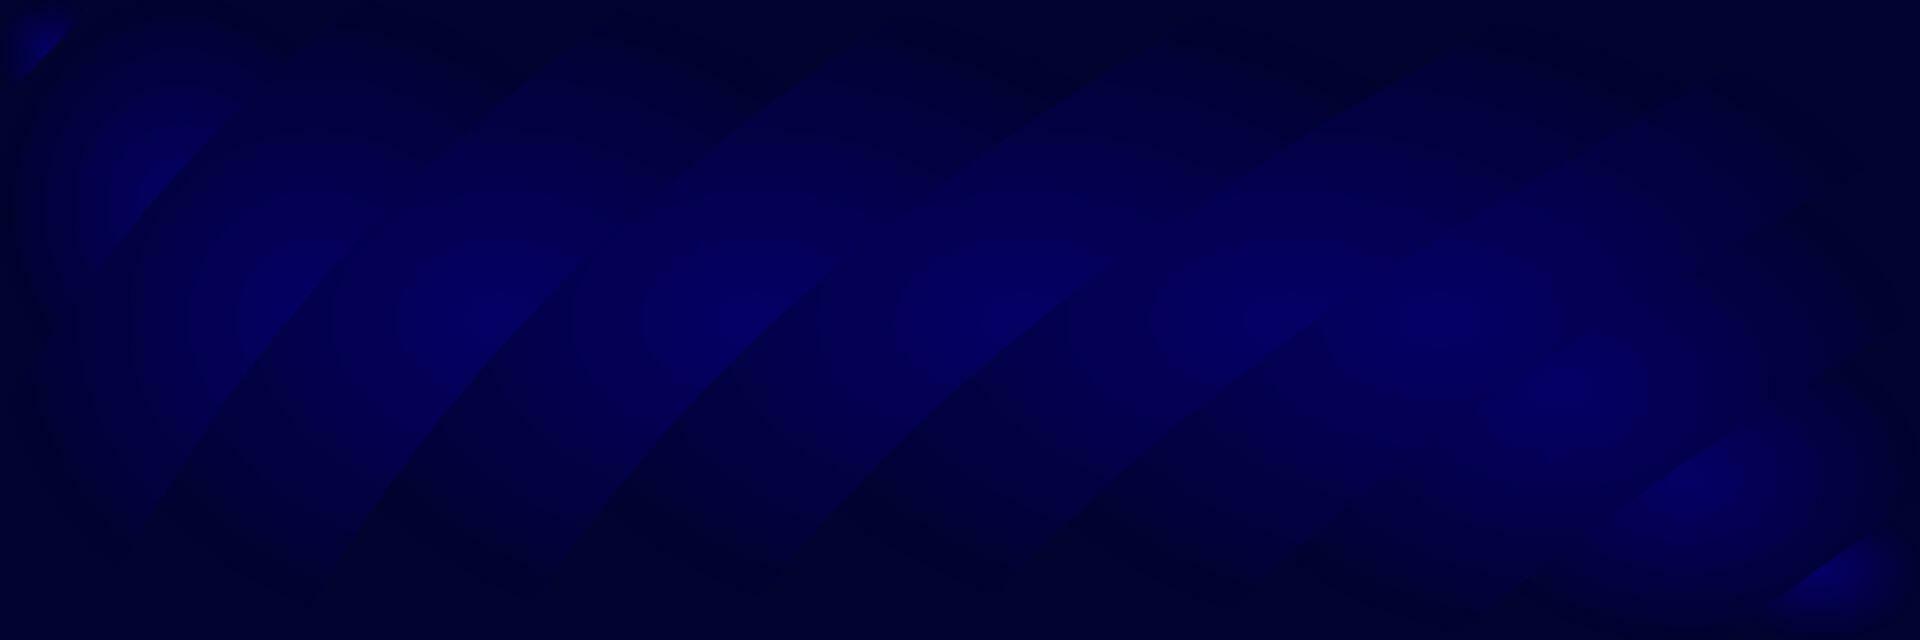 abstrakt dunkel Blau elegant korporativ Hintergrund vektor